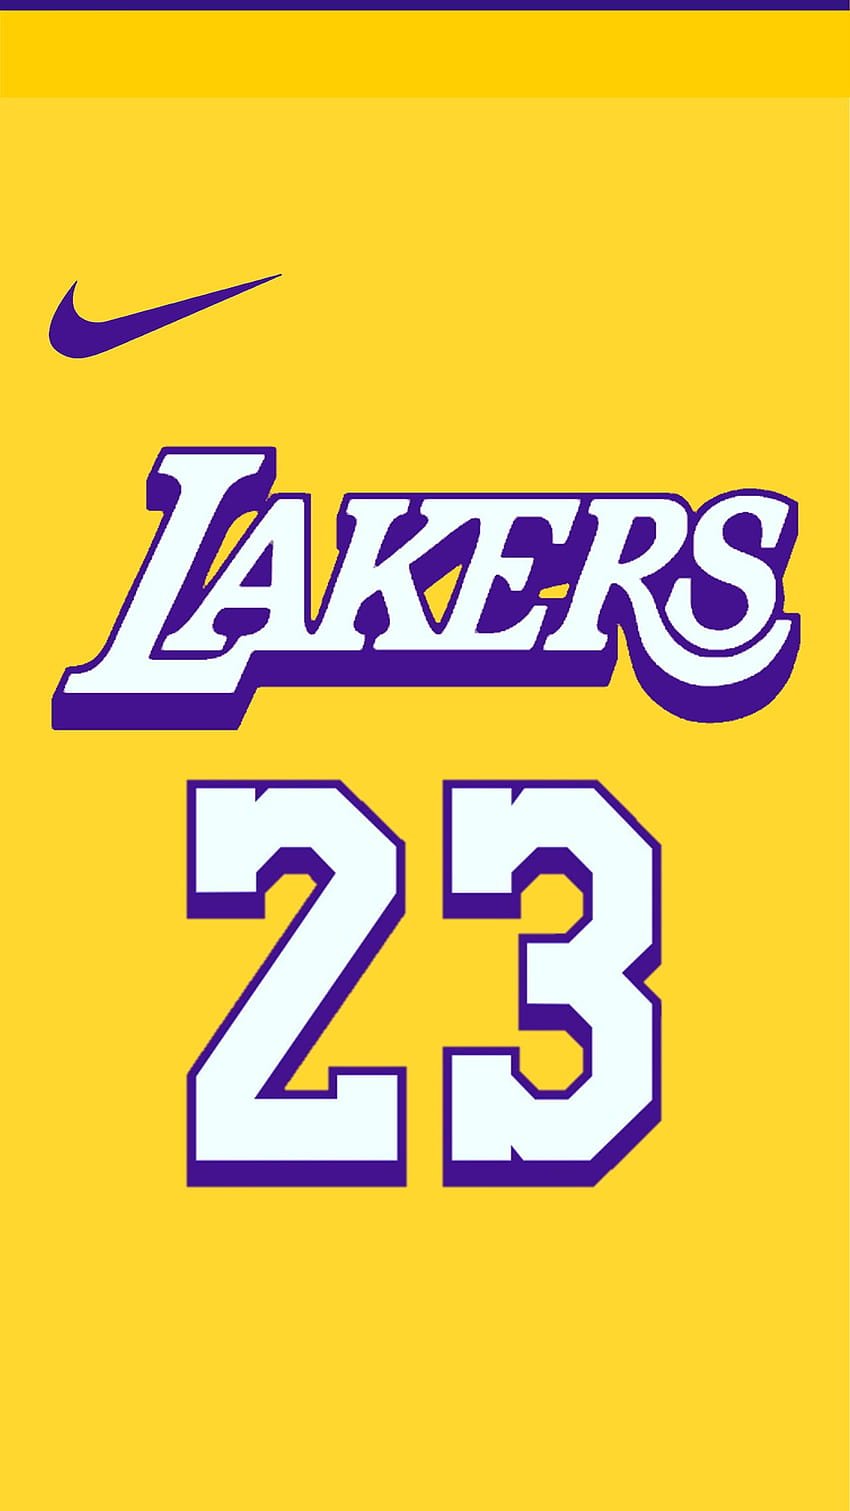 Los Angeles Lakers 2019, lakers jersey HD phone wallpaper